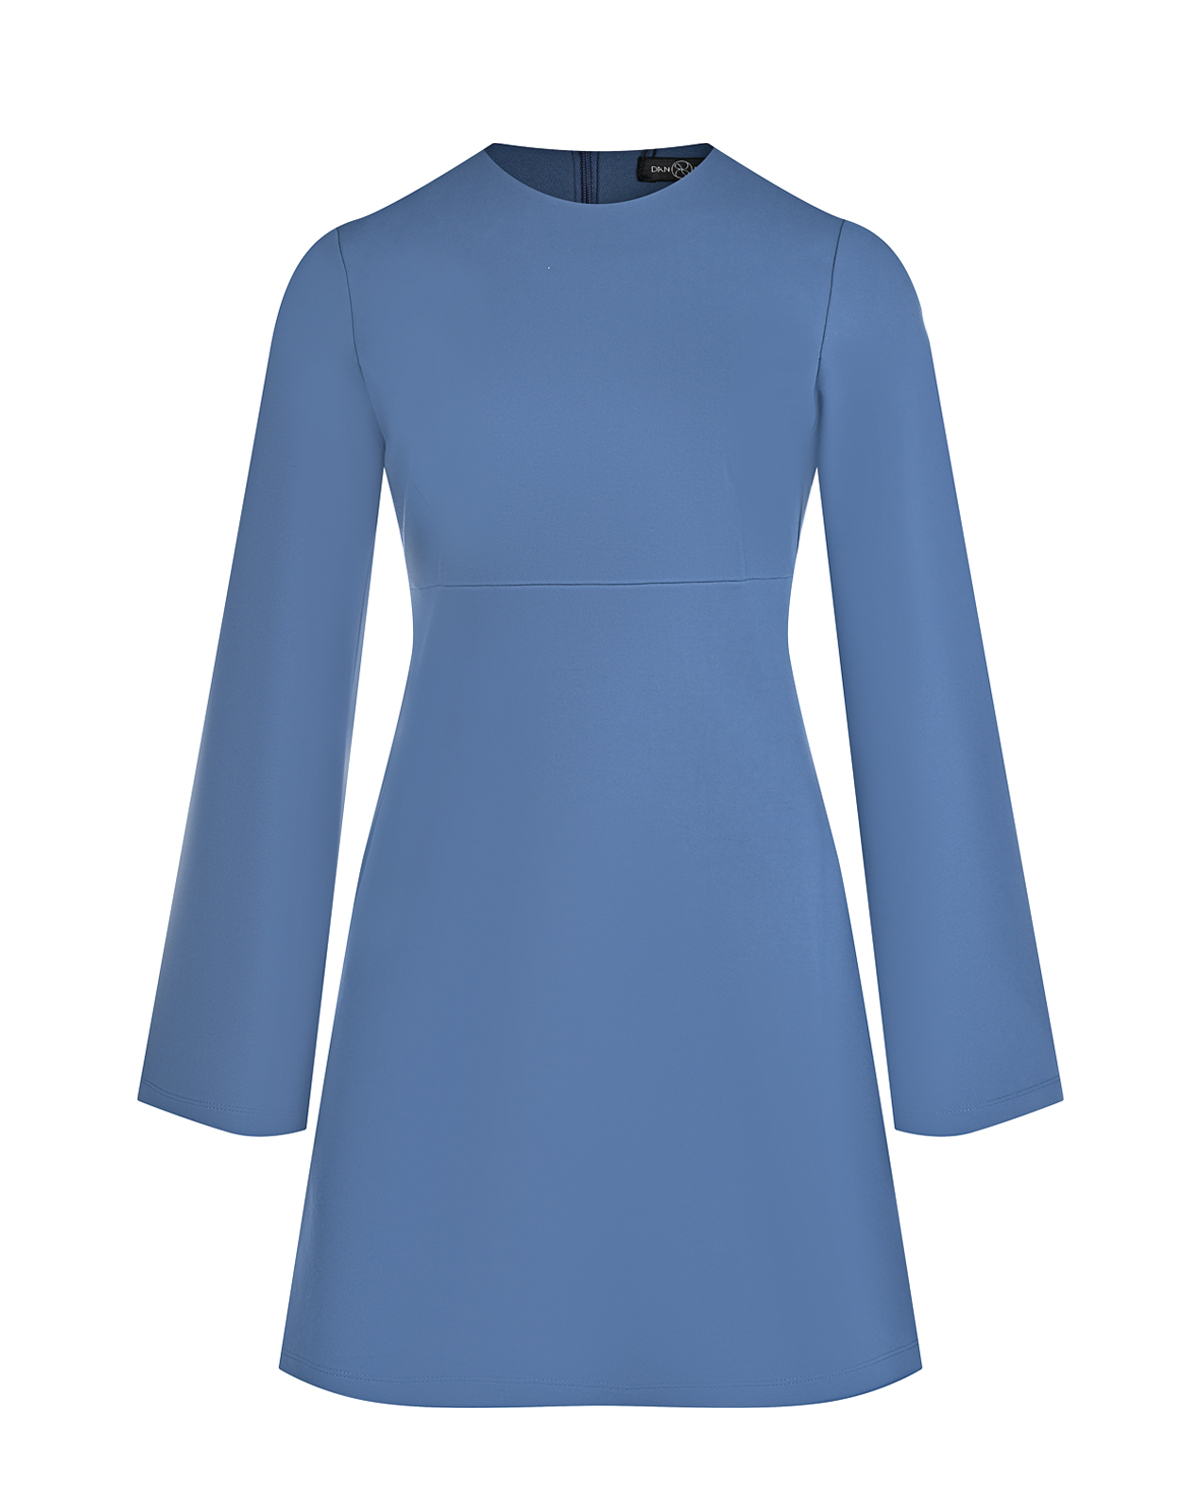 Синее платье с рукавами клеш Dan Maralex, размер 42, цвет синий - фото 1